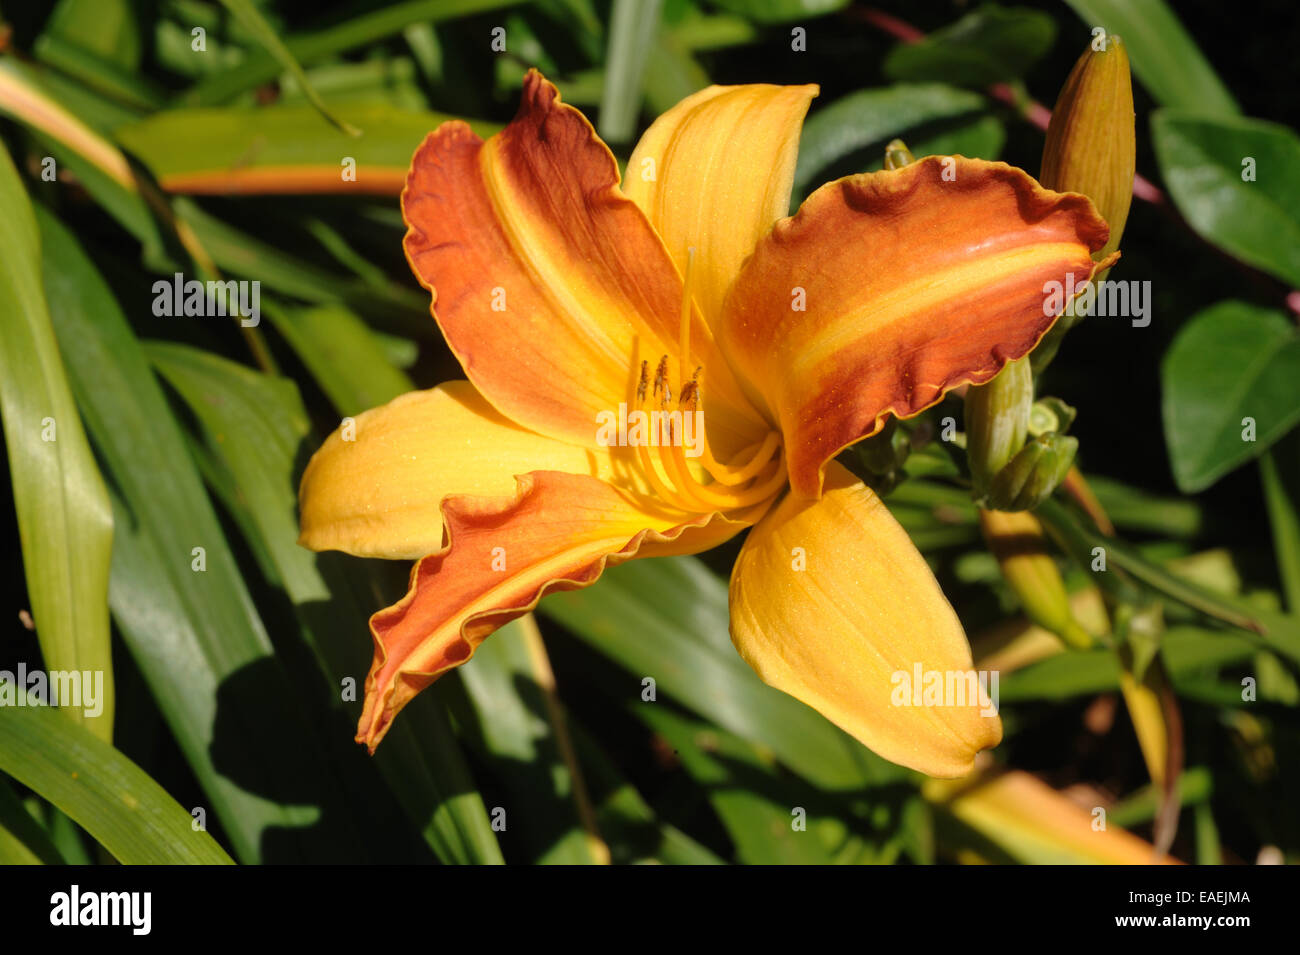 A daylily flower, Hemerocallis 'Frans Hals', in a herbaceous garden flower border Stock Photo